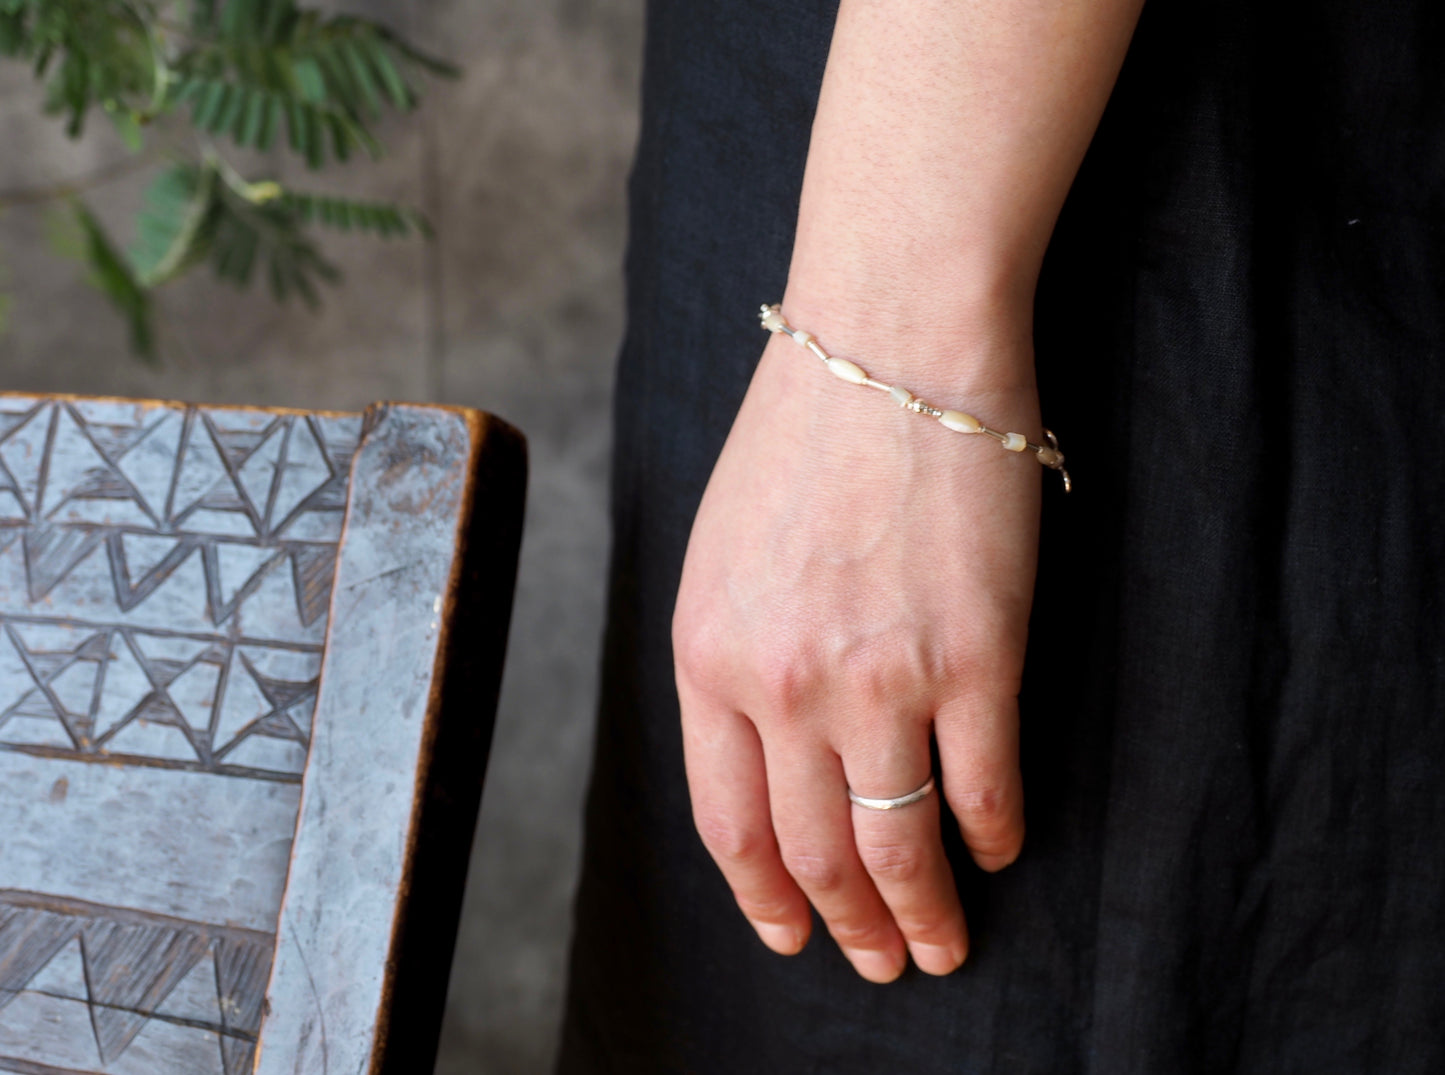 Mother-of-pearl silver bracelet